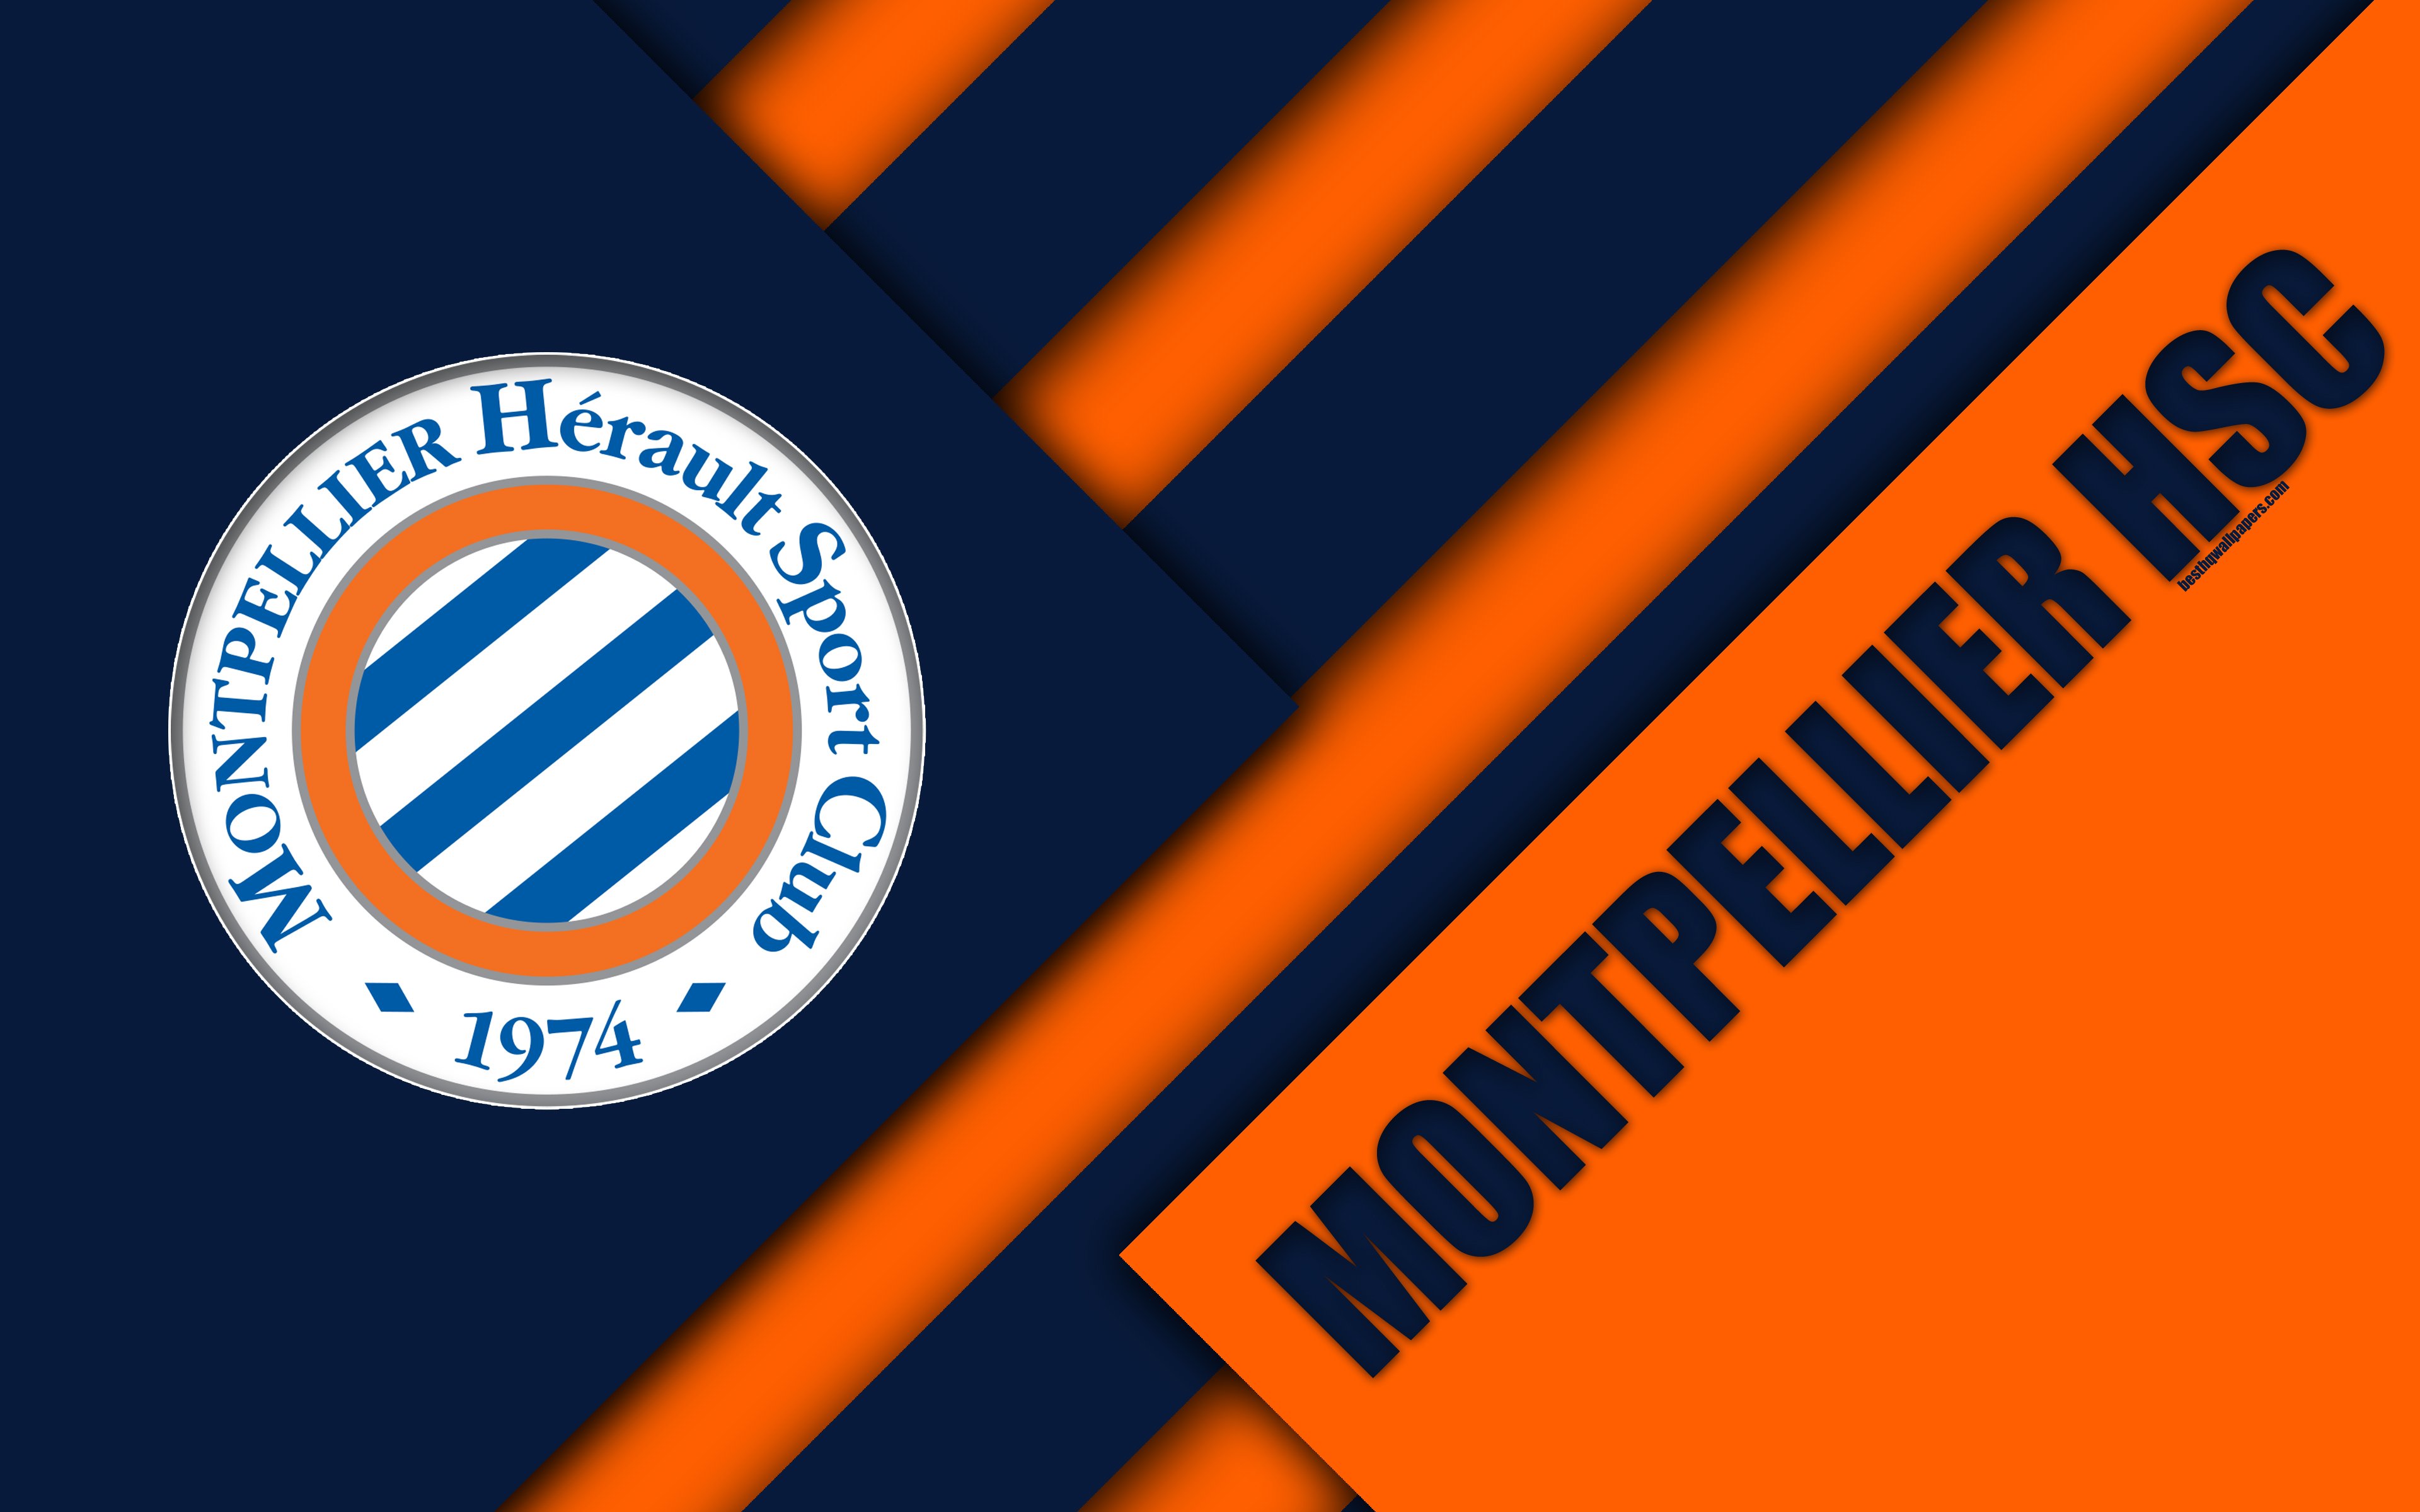 Download wallpaper Montpellier HSC, 4k, material design, logo